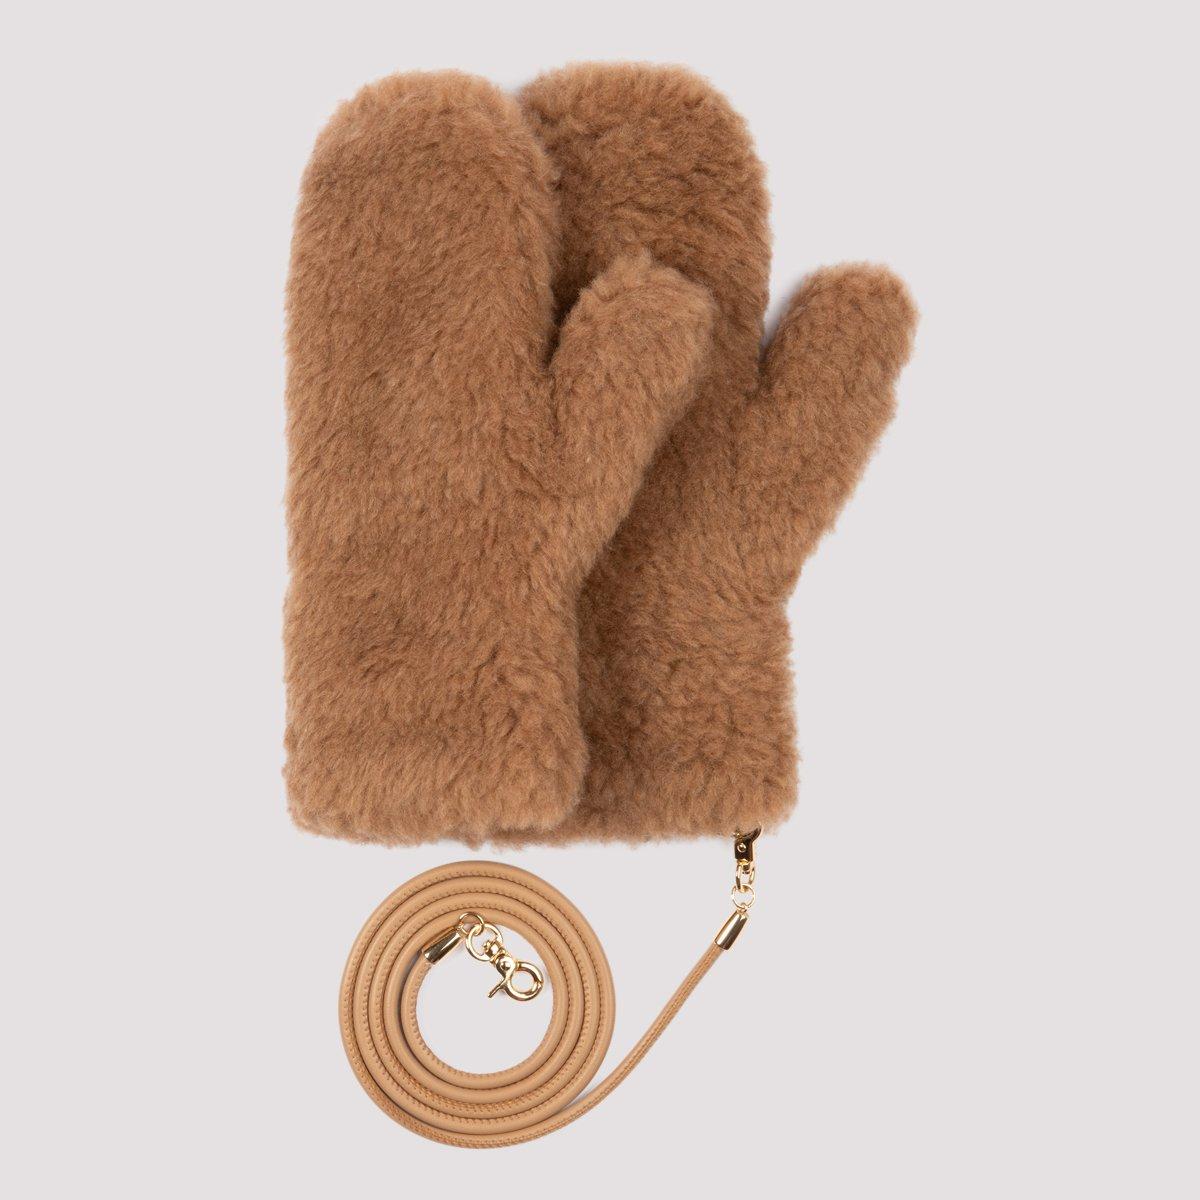 Max Mara Wool Teddy Gloves in Brown - Lyst